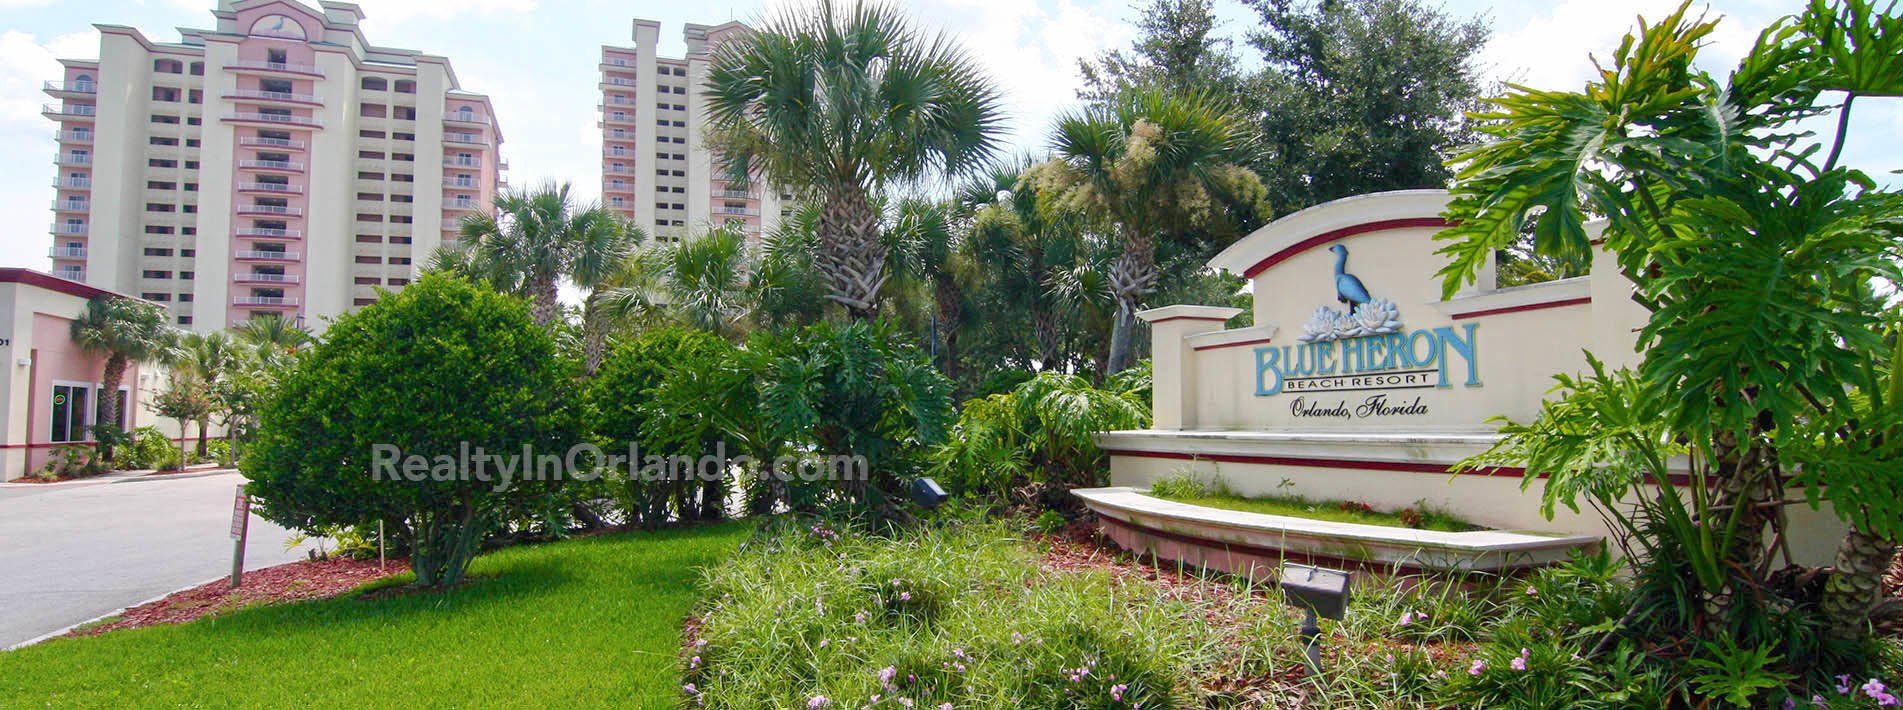 Blue Heron Beach Resort Investment Property